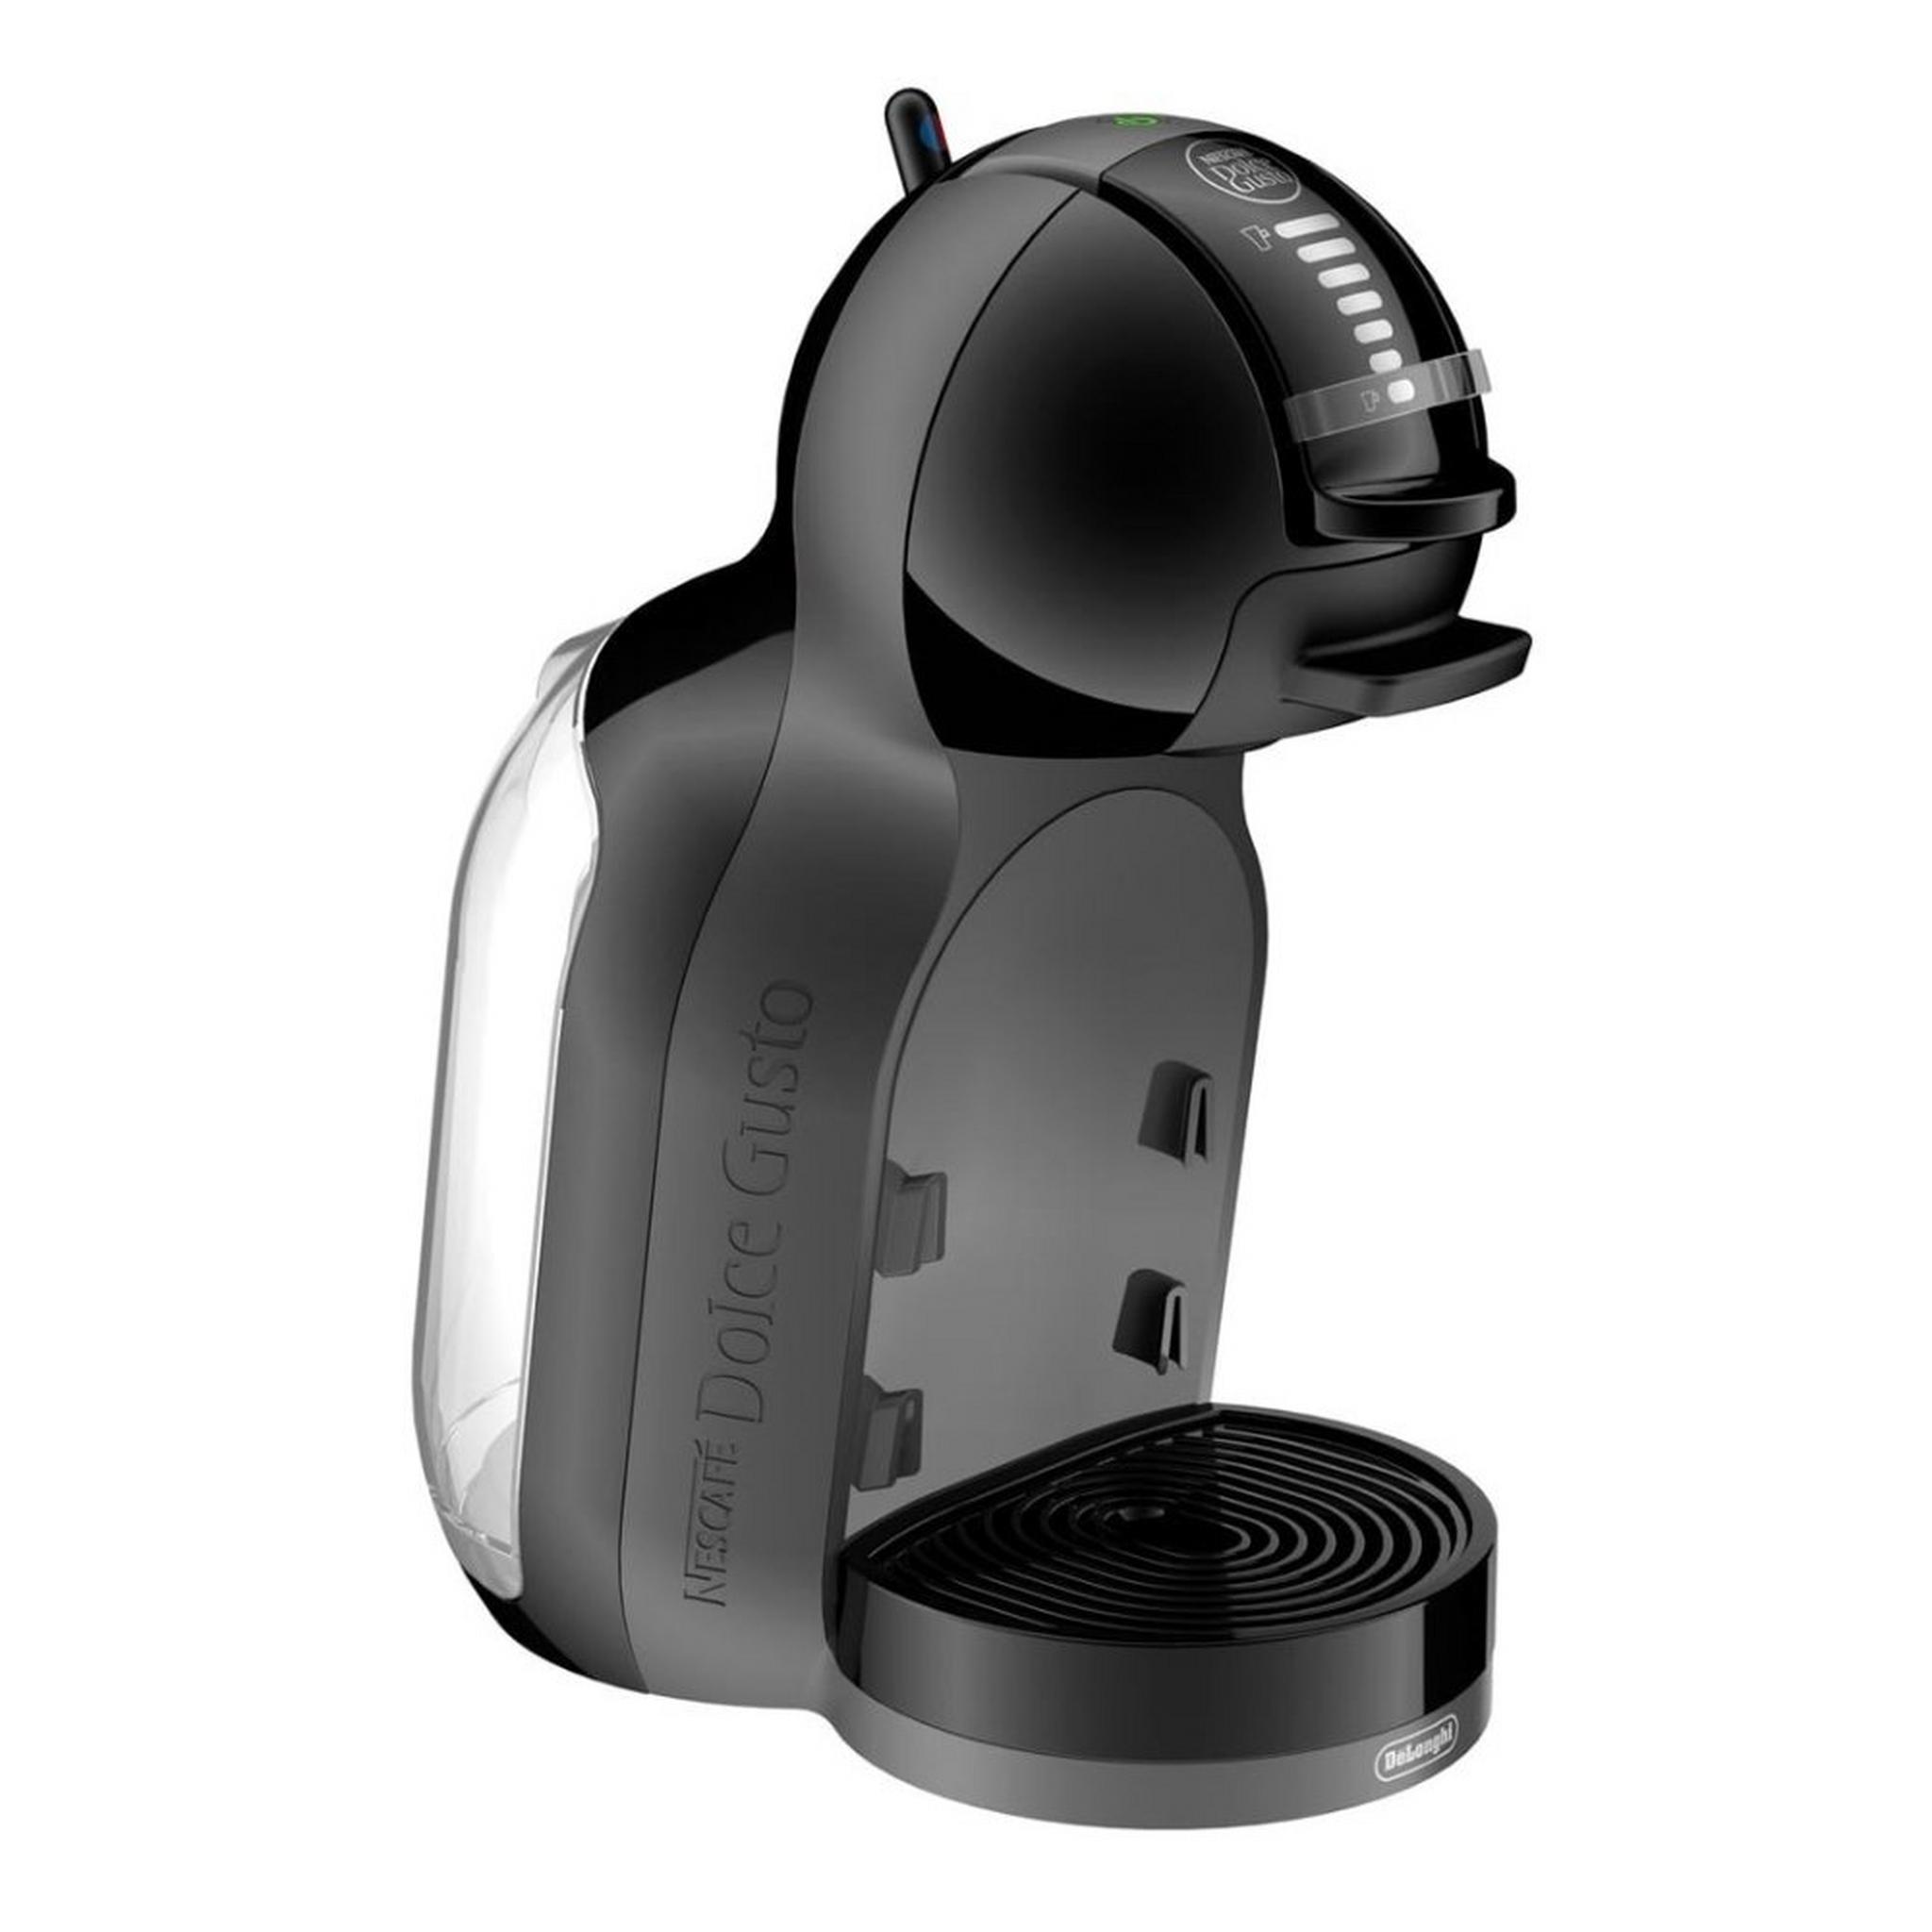 Delonghi 1460W 0.8L Mini Me Coffee Maker - Black/Grey